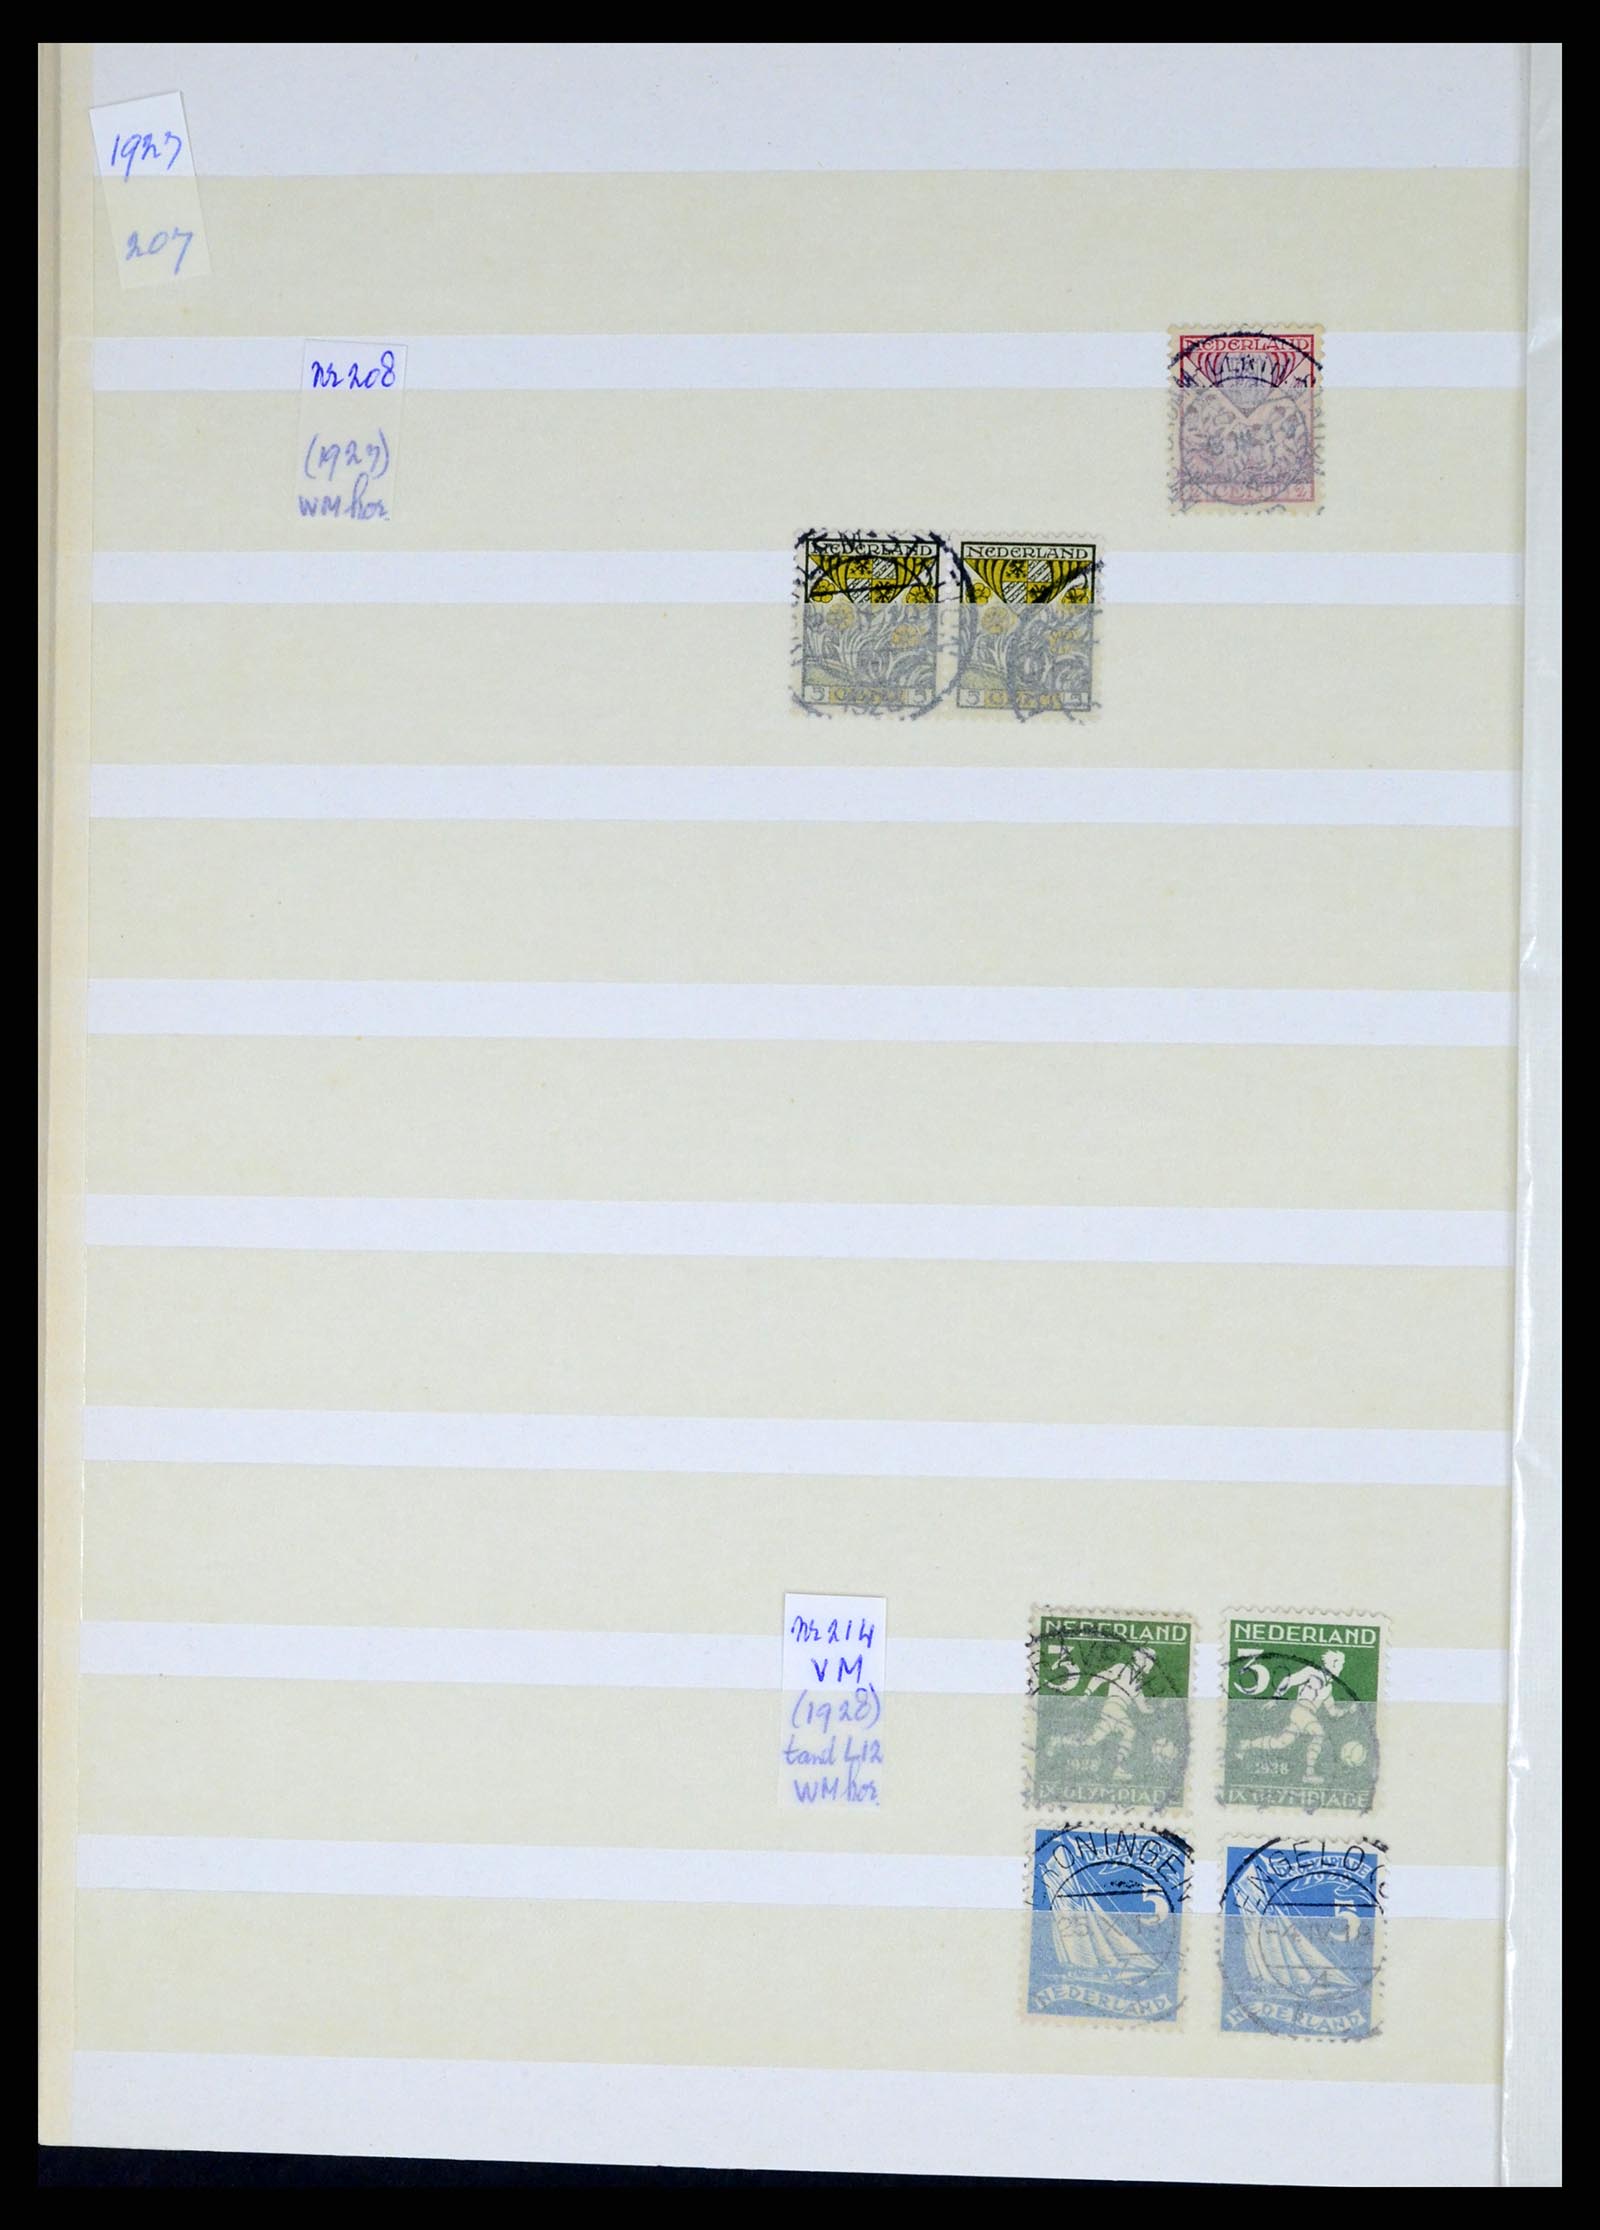 37424 012 - Stamp collection 37424 Netherlands shortbar cancels.